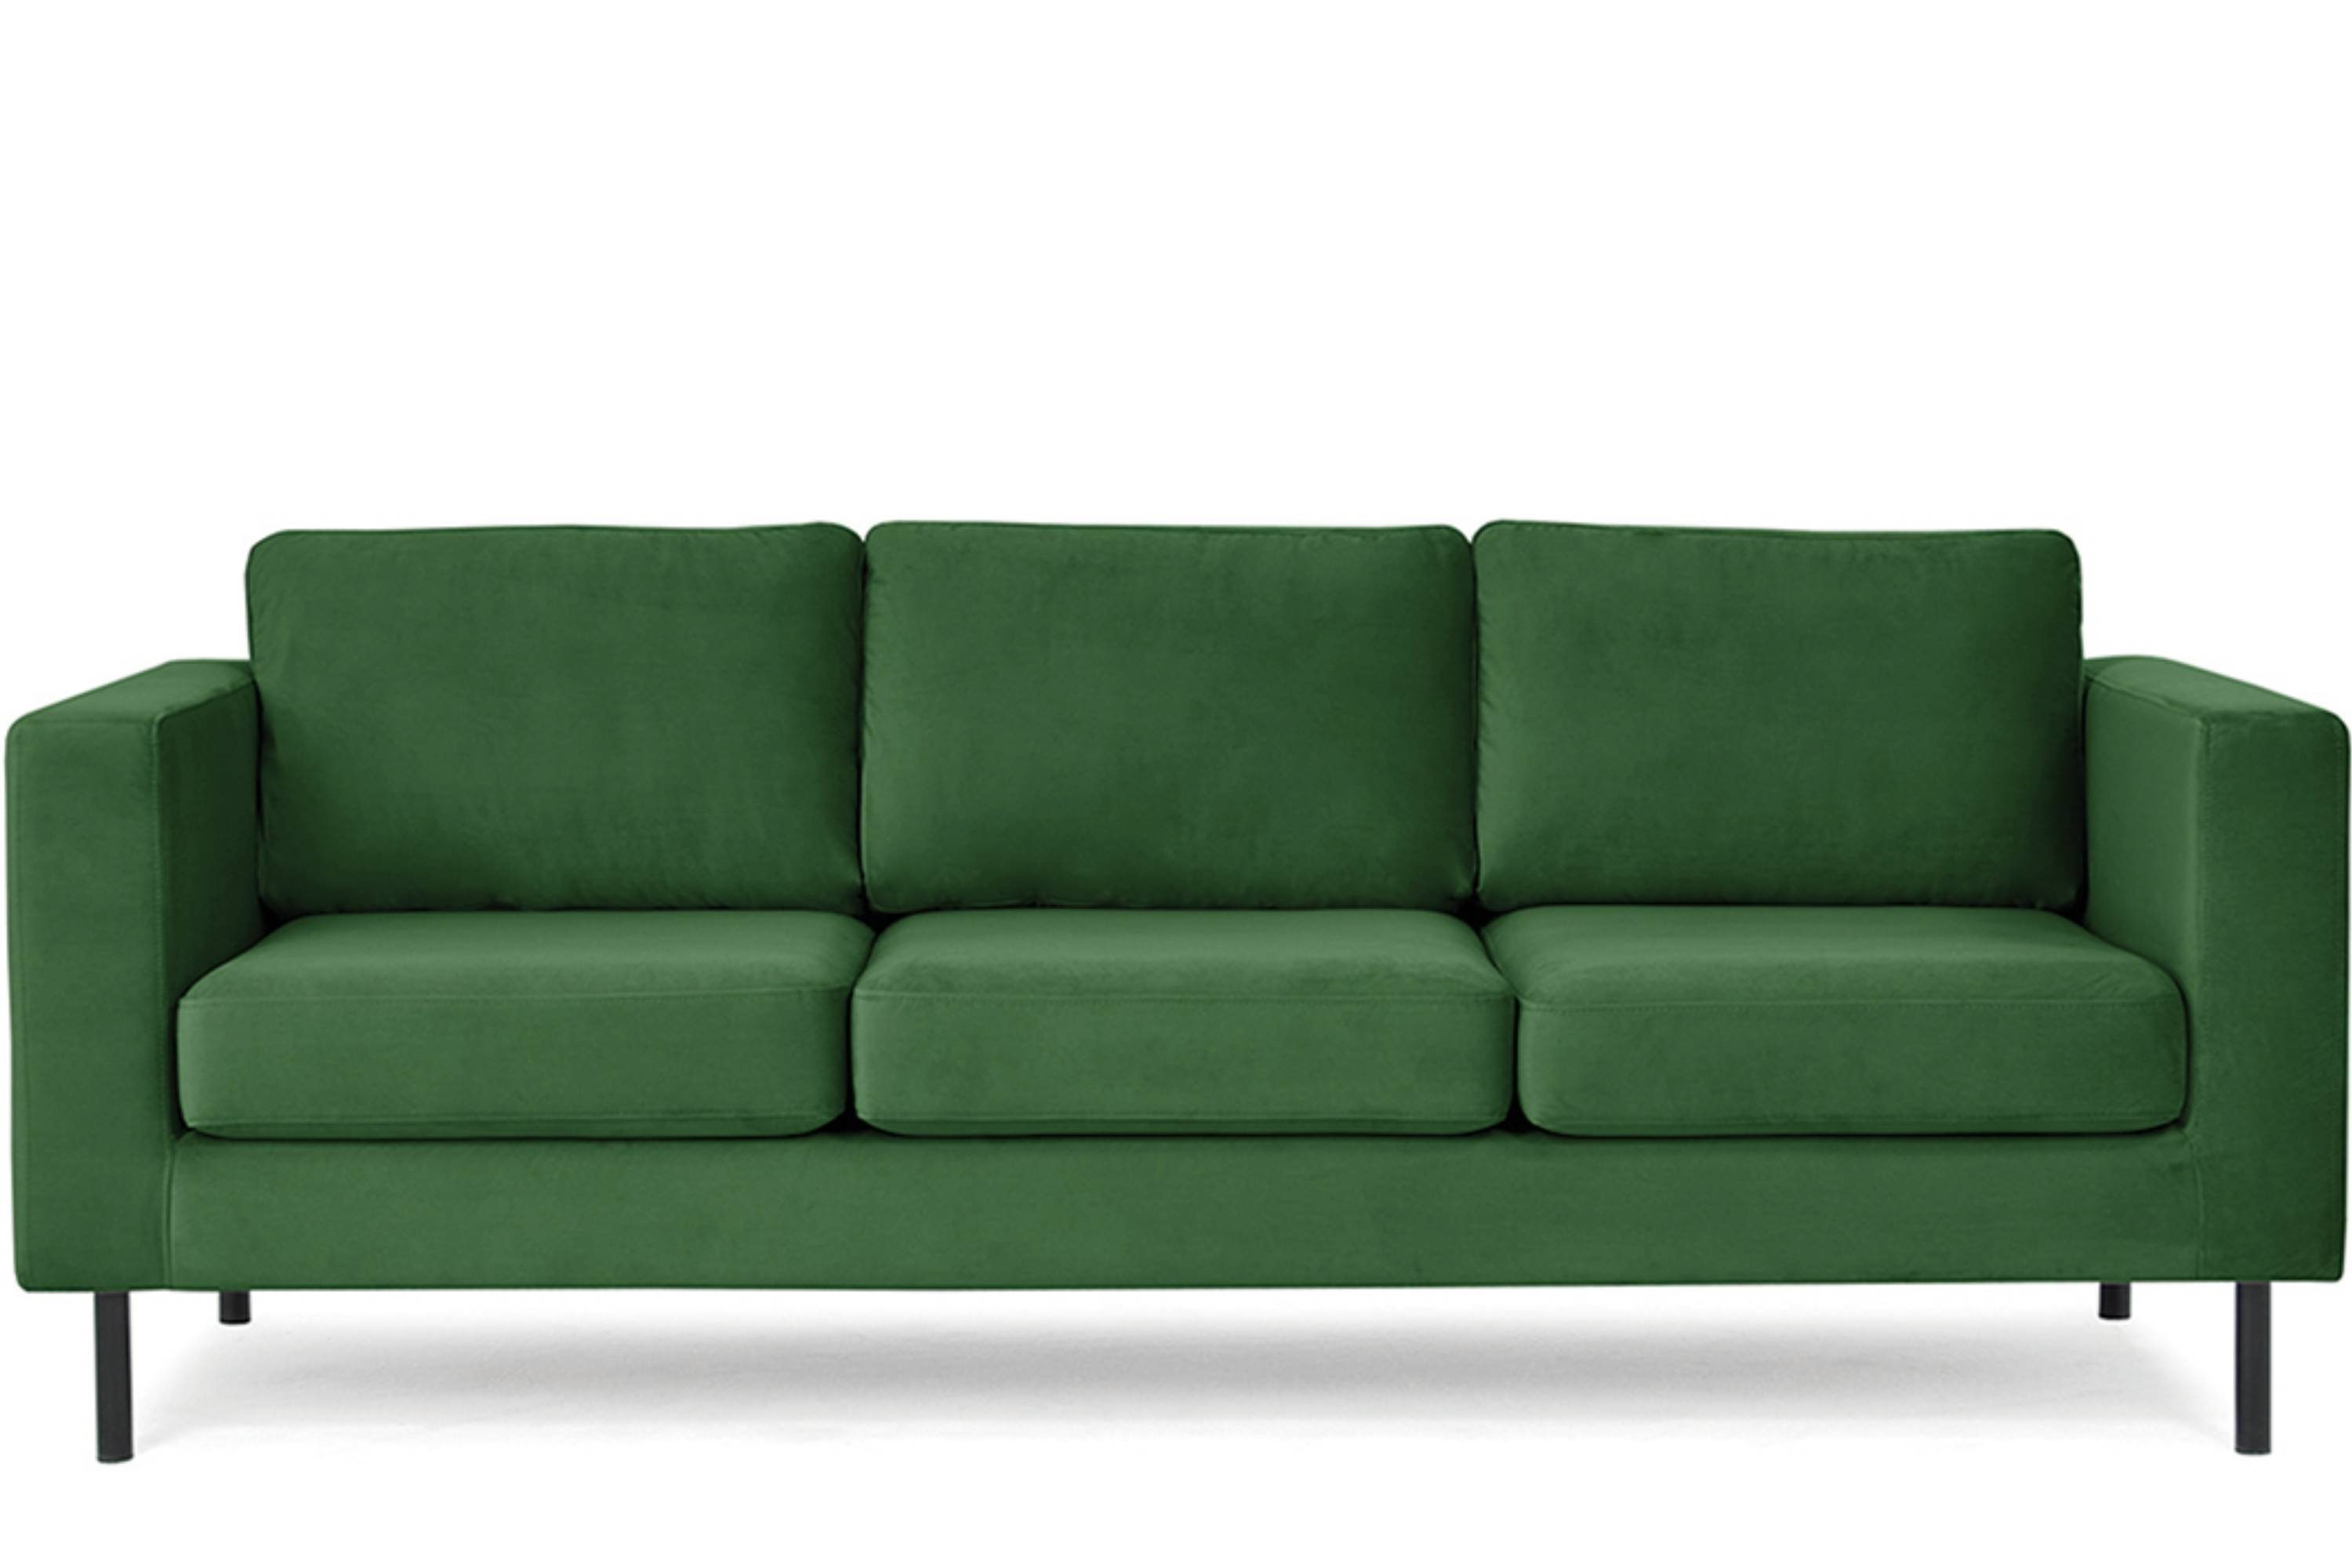 | | Beine, 3 grün hohe Konsimo grün grün universelles TOZZI 3-Sitzer Personen, Sofa Design